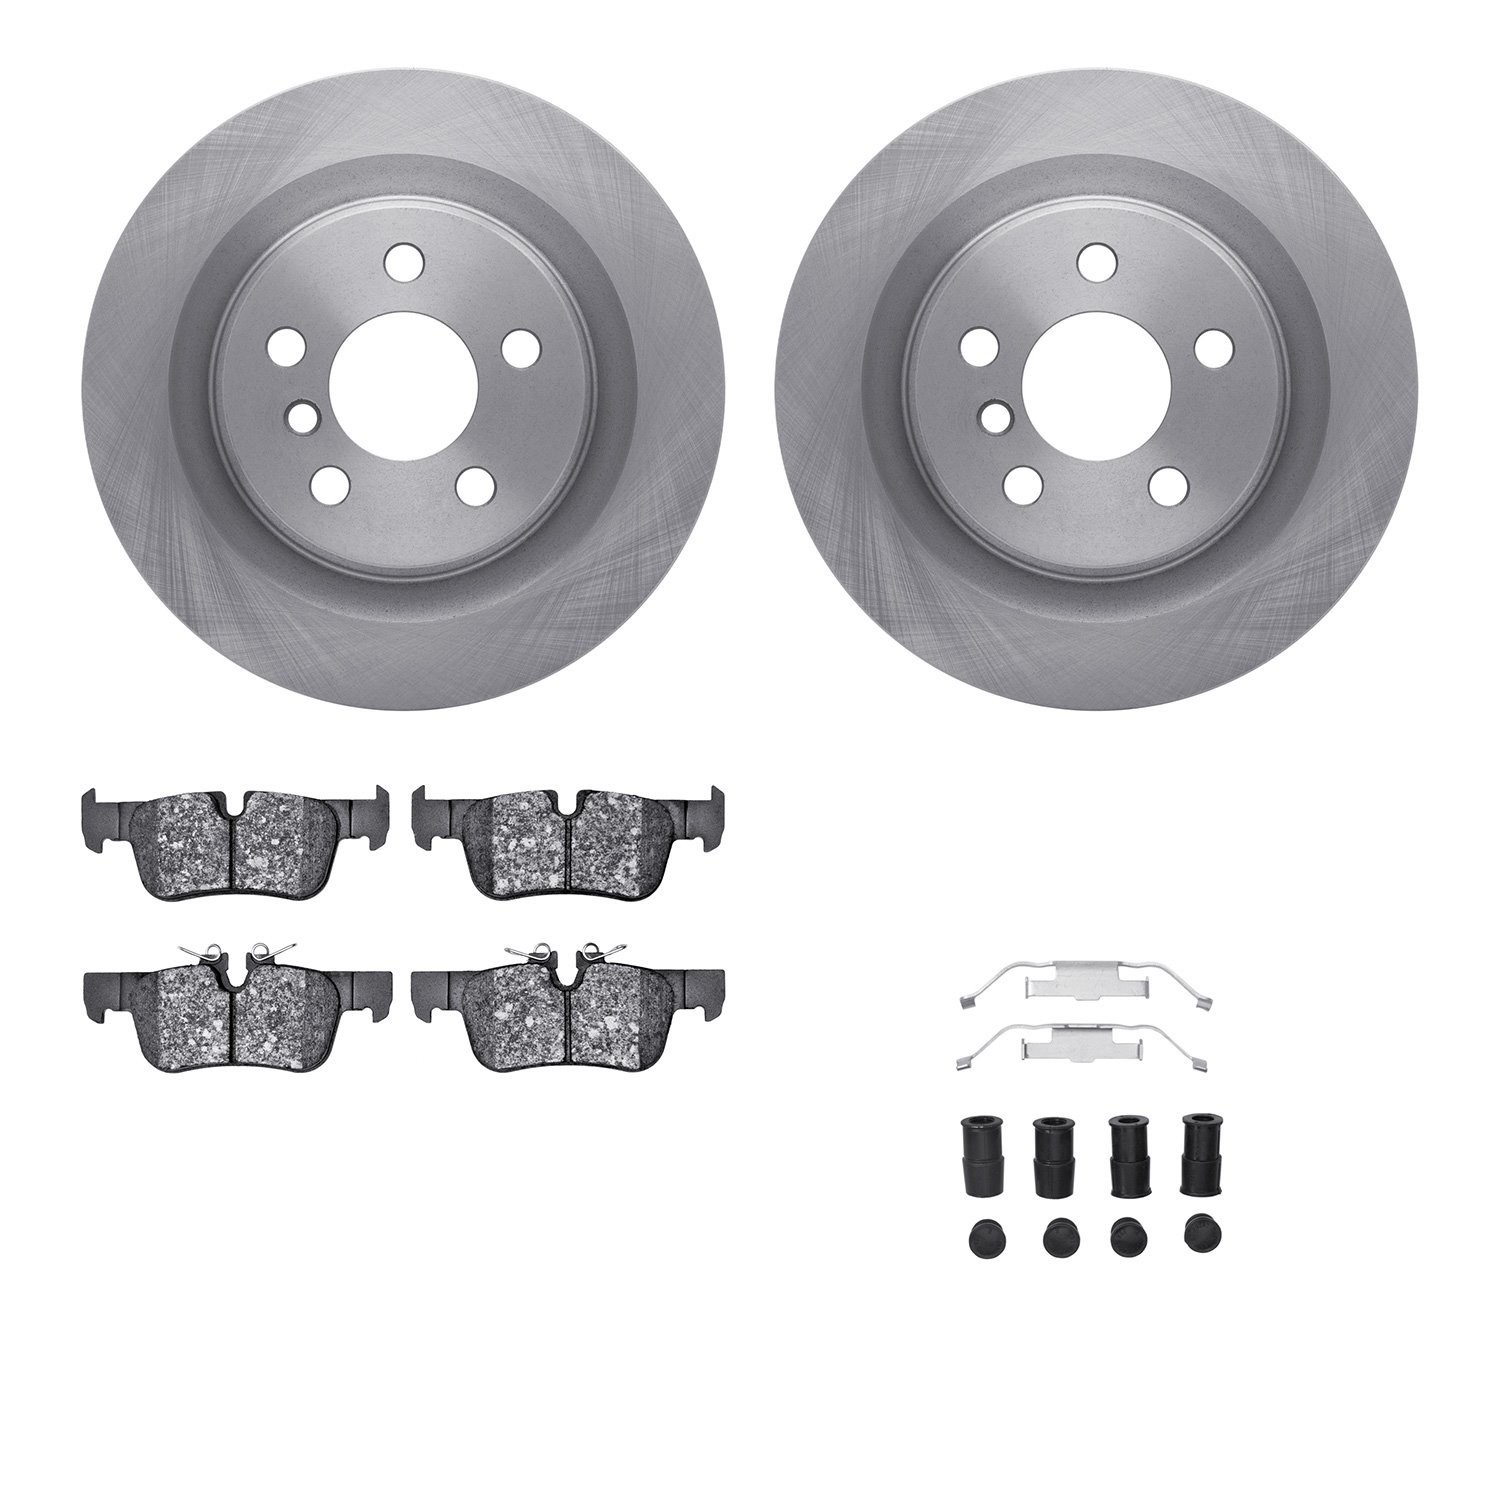 6612-31489 Brake Rotors w/5000 Euro Ceramic Brake Pads Kit with Hardware, Fits Select Multiple Makes/Models, Position: Rear